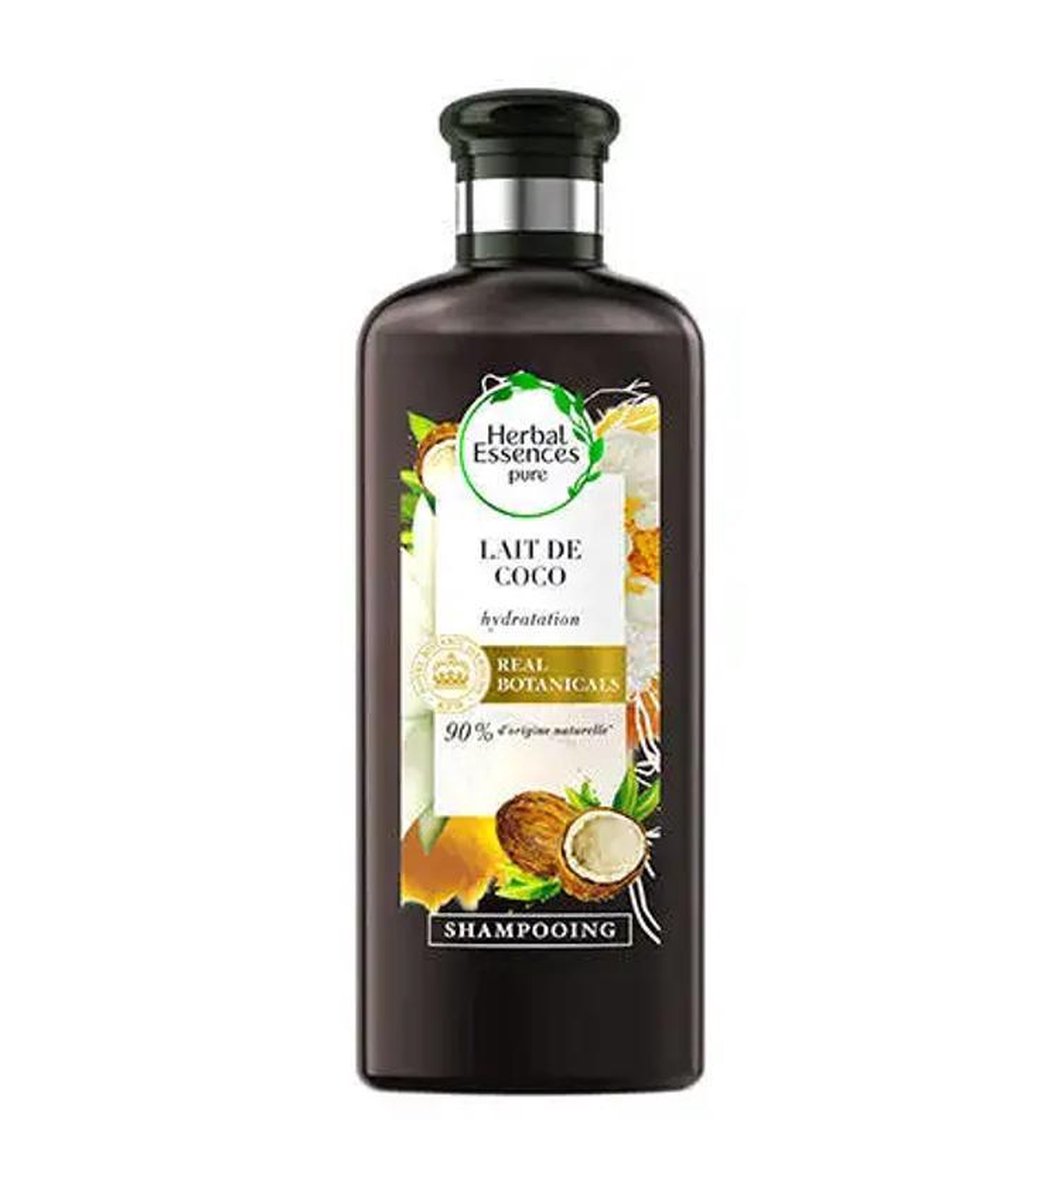 Herbal Essences Shampoo Coconut Milk single item